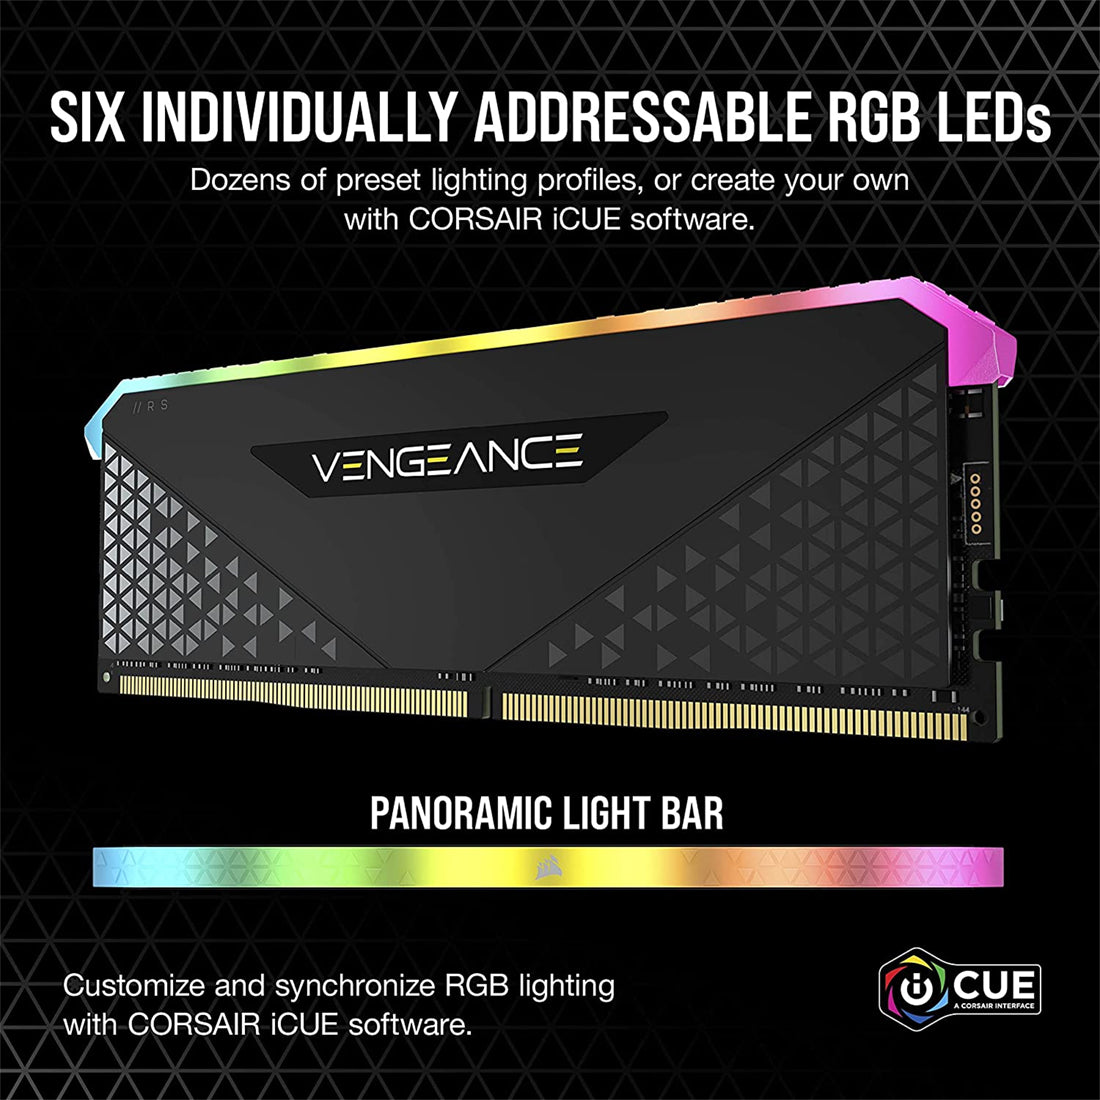 Corsair Vengeance RGB RS 8GB DDR4 RAM 3200MHz C16 Desktop Memory